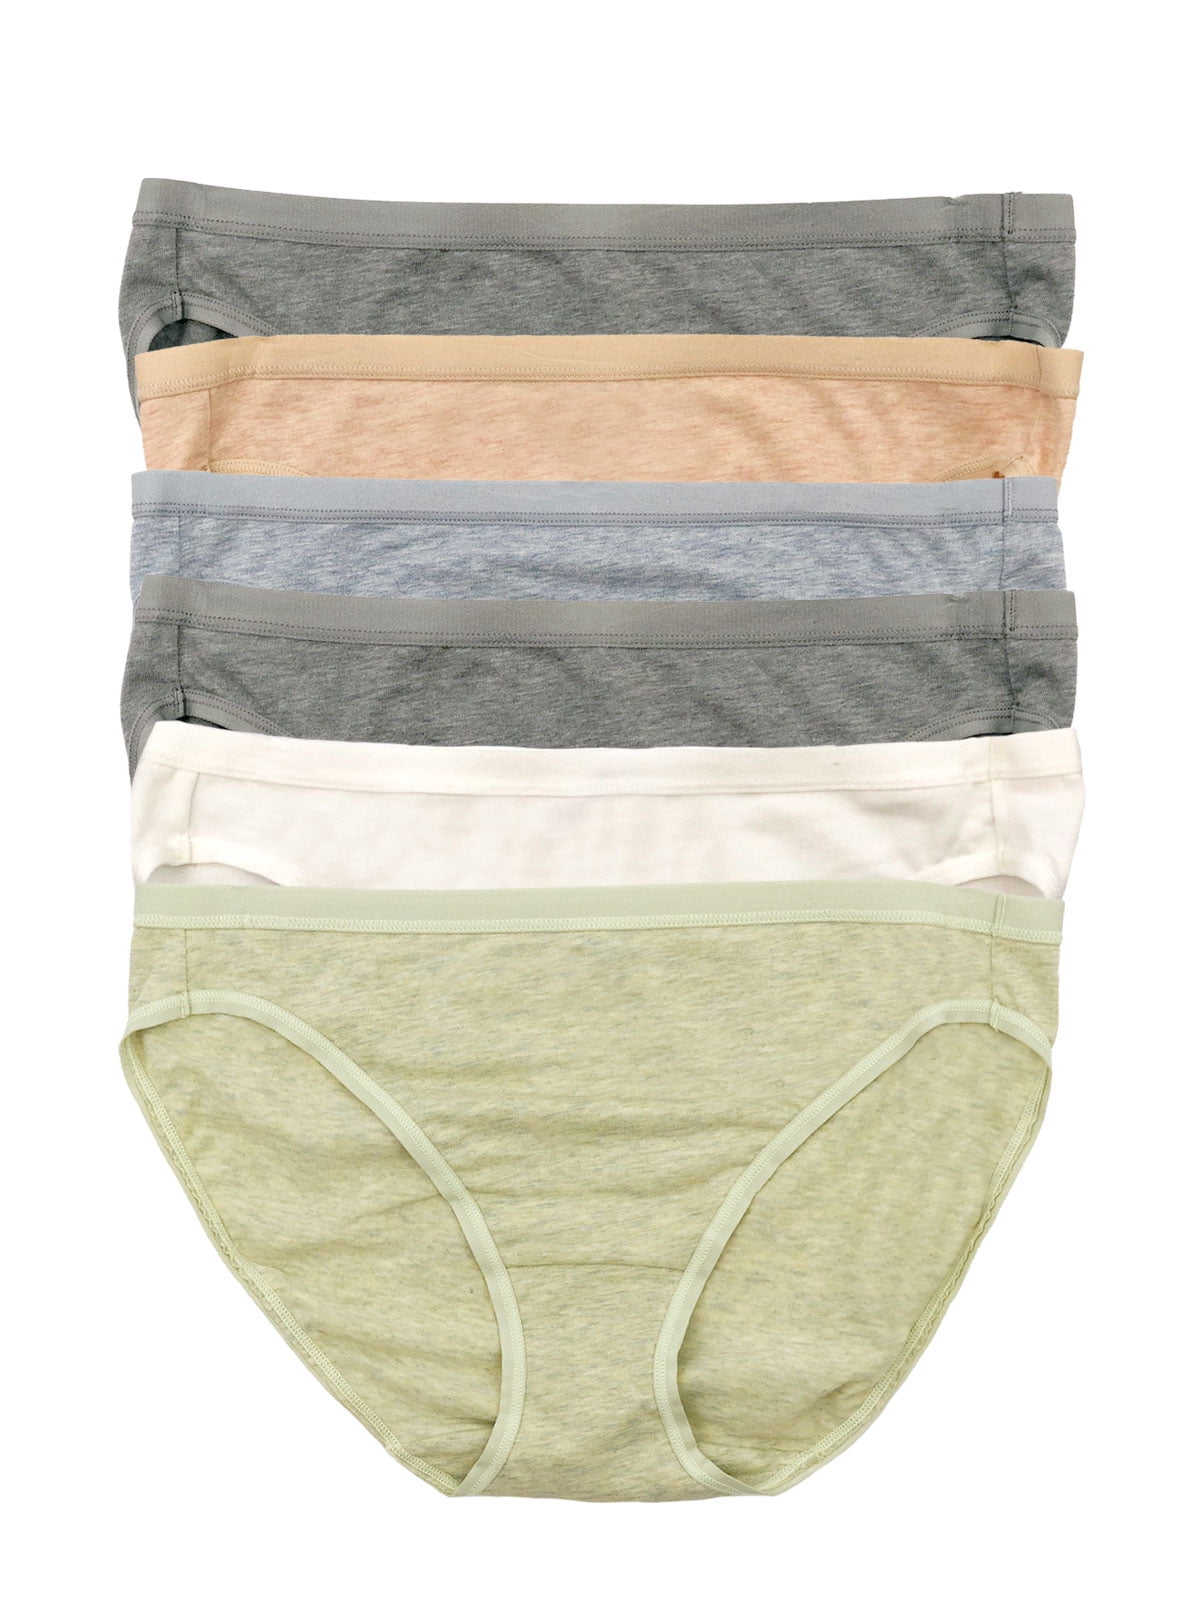 Felina Organic Cotton Bikini Underwear for Women - Bikini Panties for  Women, Seamless Panties for Women (6-Pack) (Shades of Granite, X-Large) 